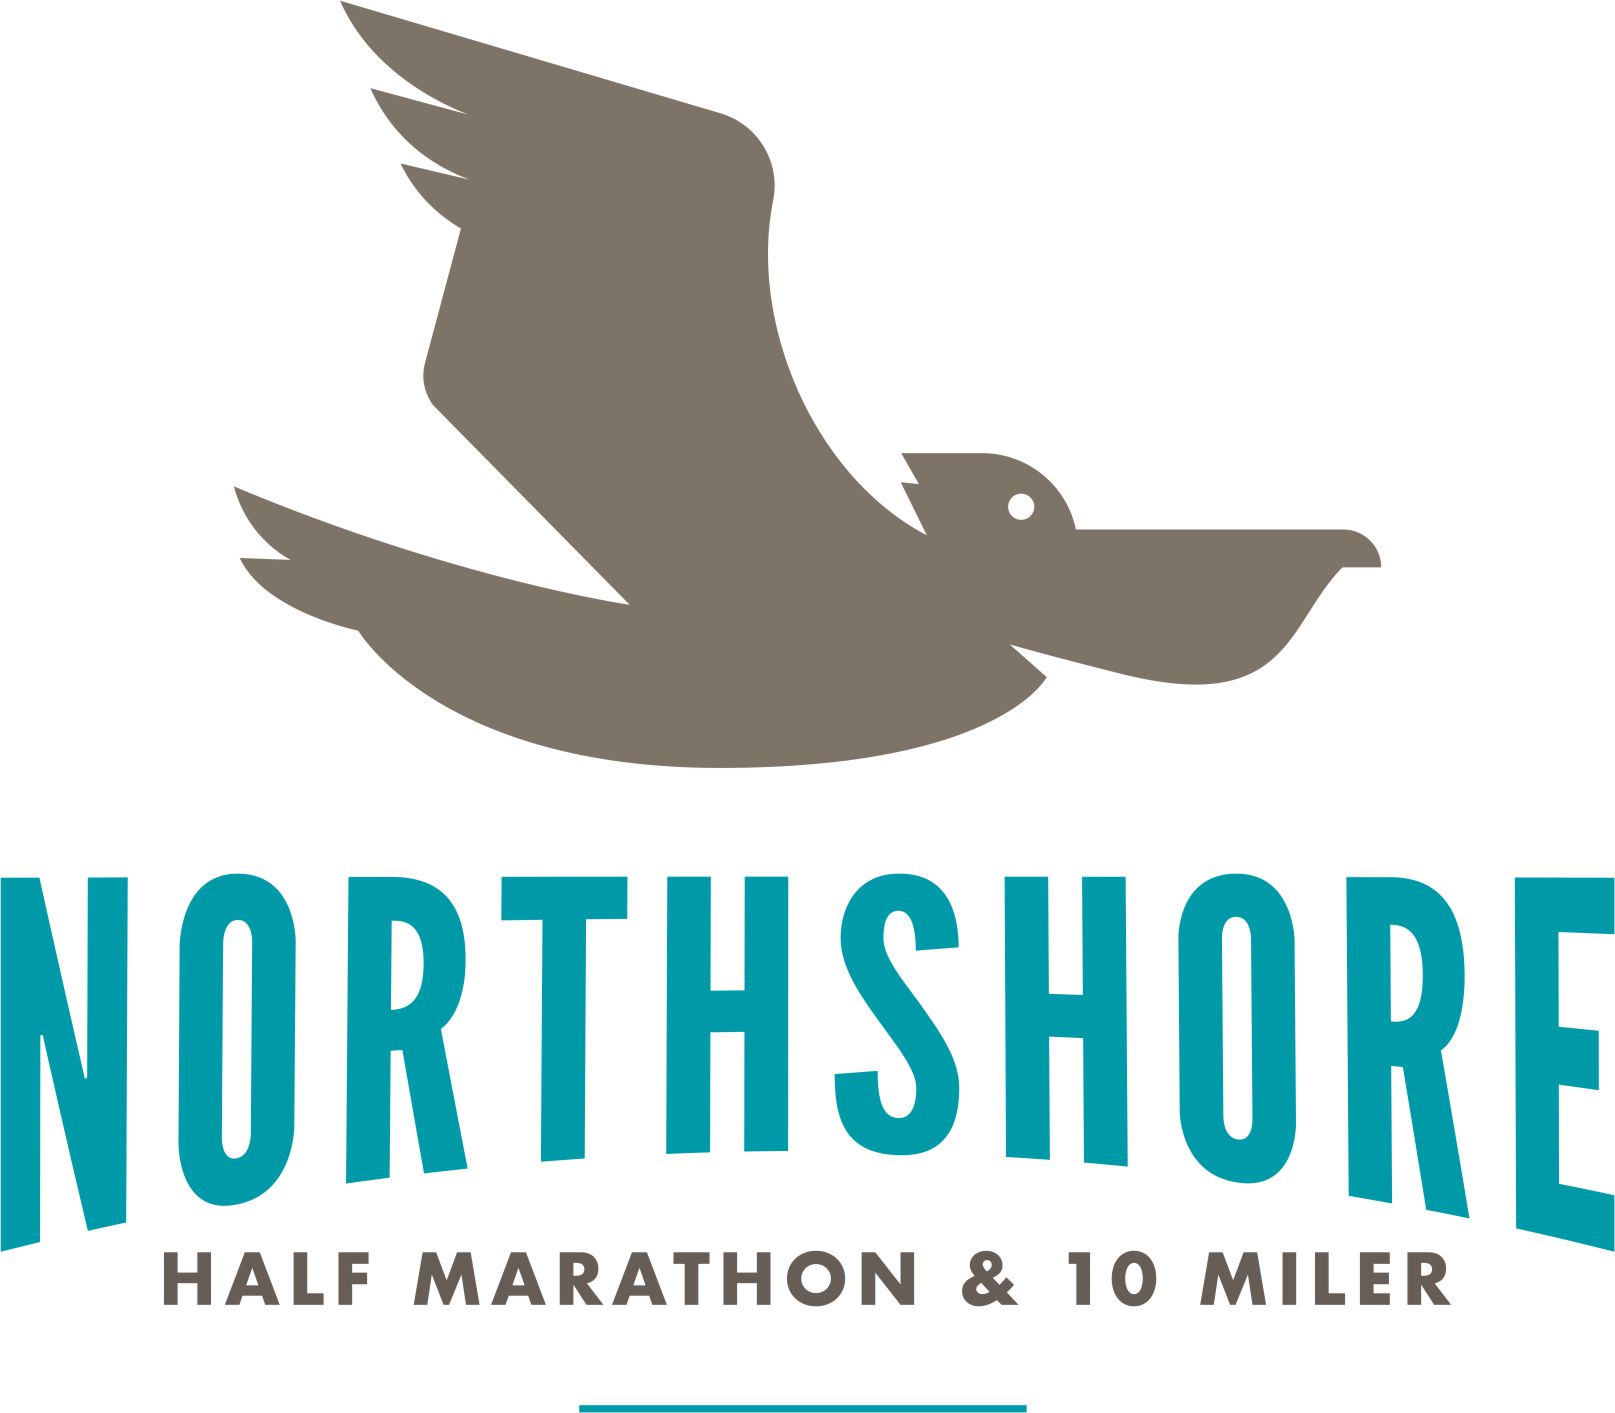 12th annual Northshore Half Marathon and 10miler return to St. Tammany